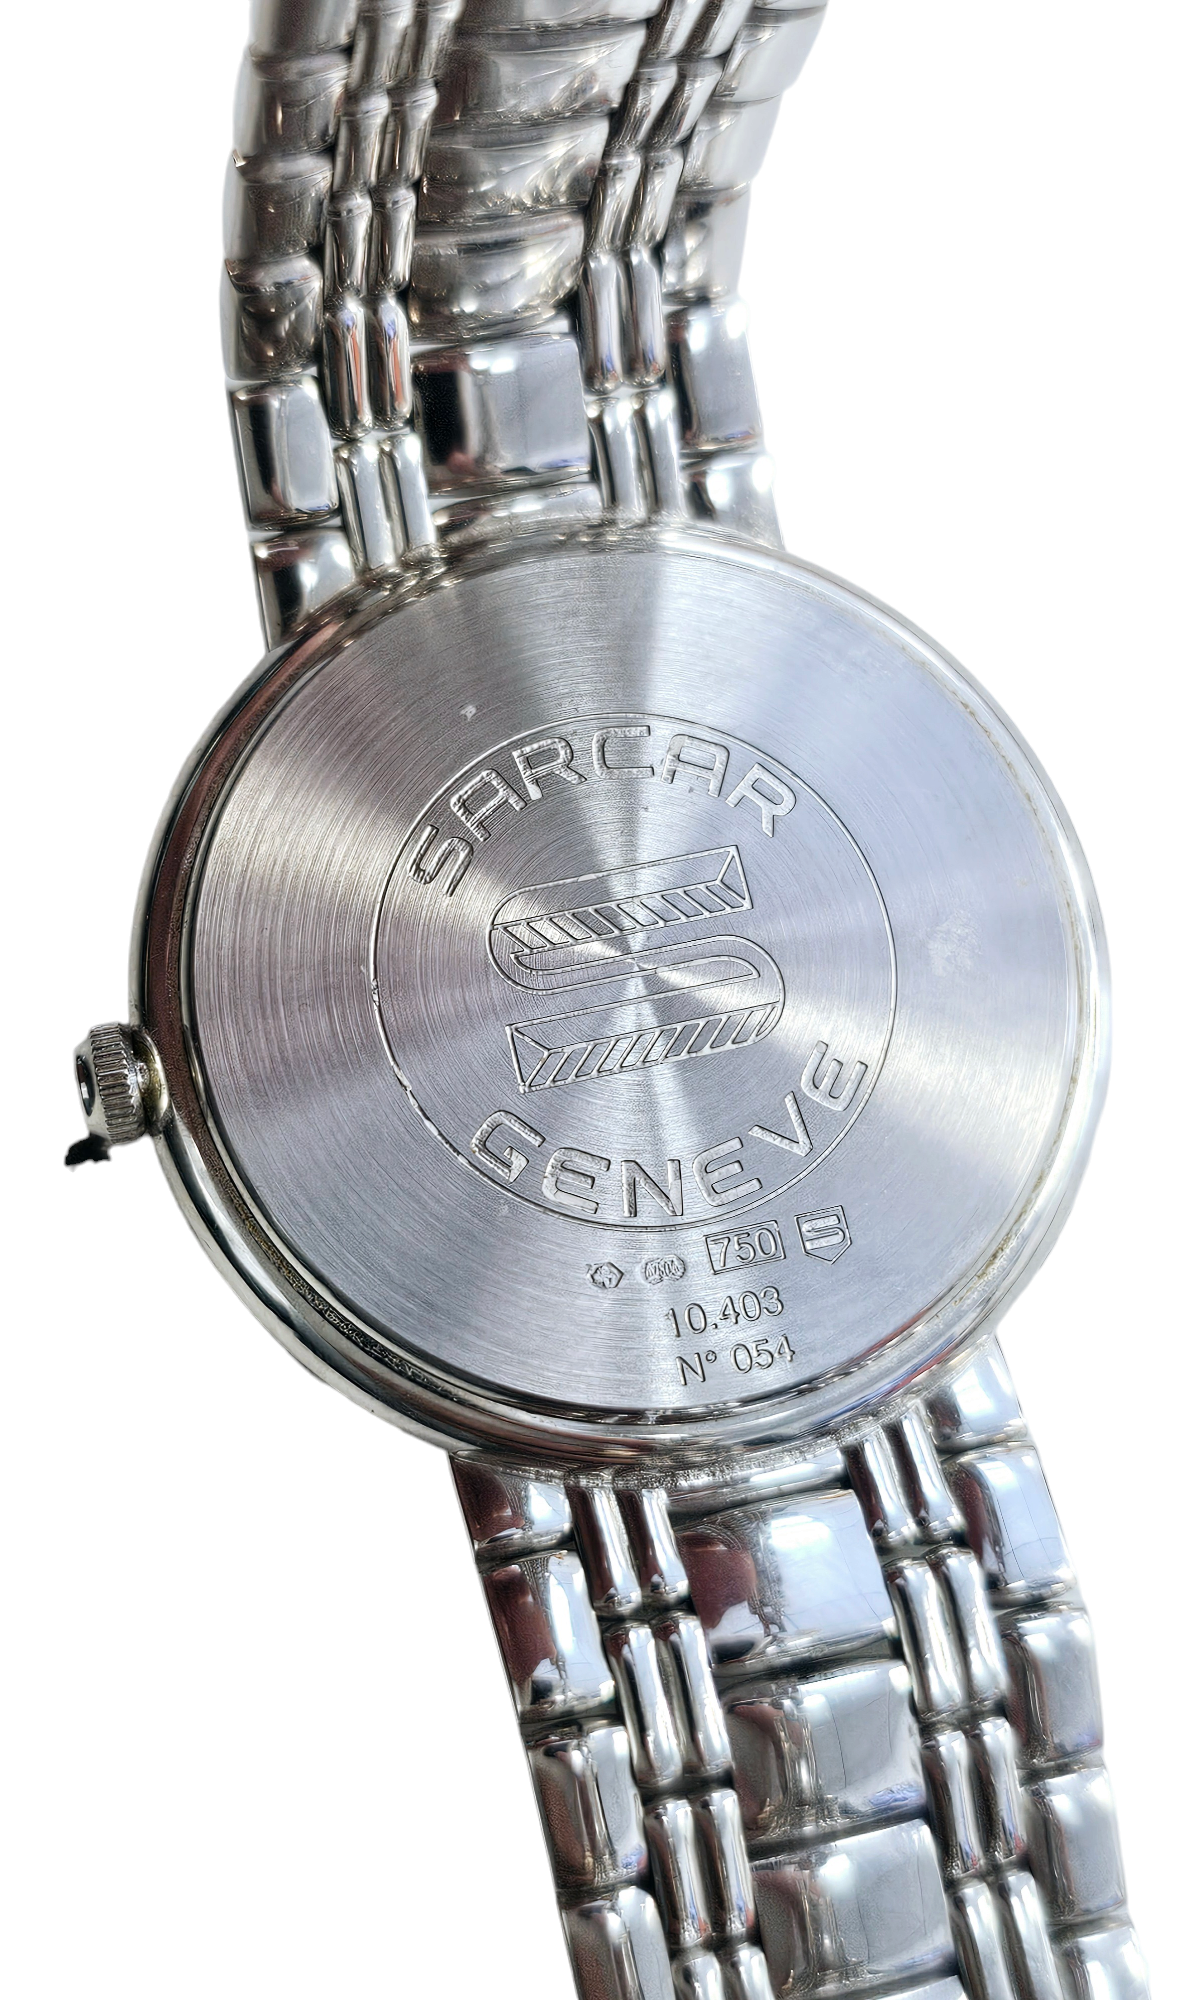 Sarcar Geneve Diamond Bezel/ Diamond Marker Watch made in 18-karat White Gold